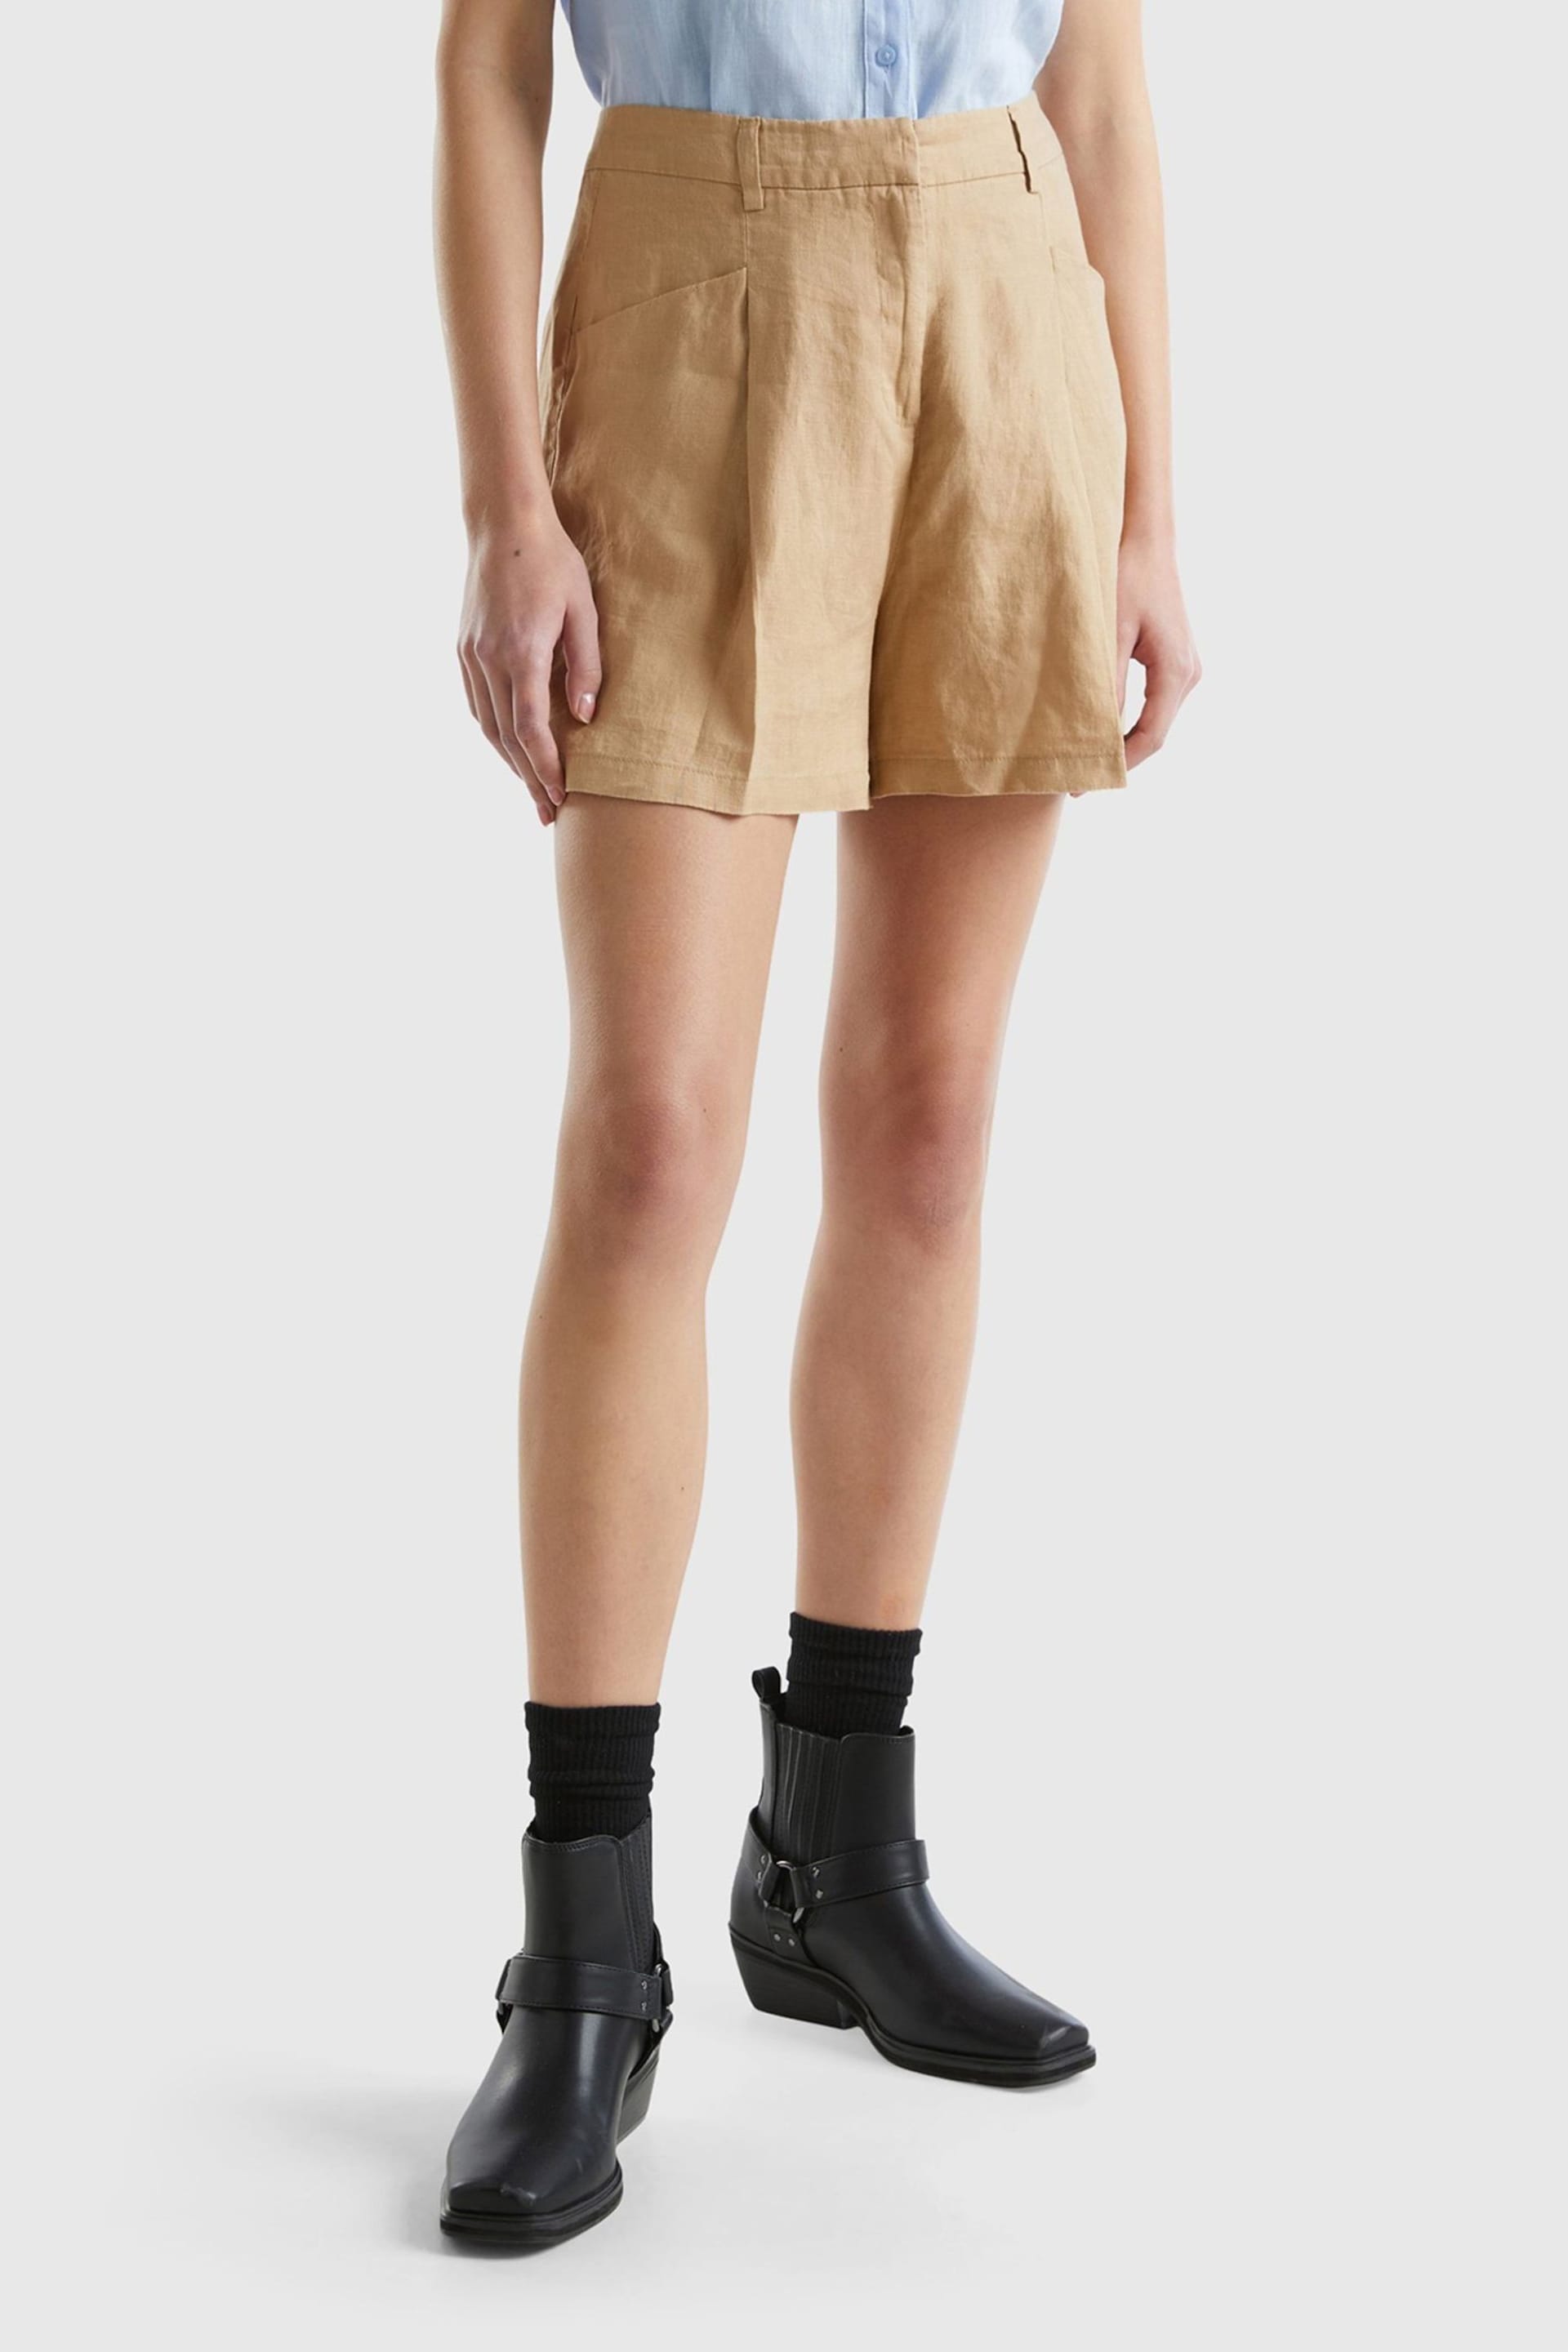 Benetton Linen Shorts - Image 1 of 4